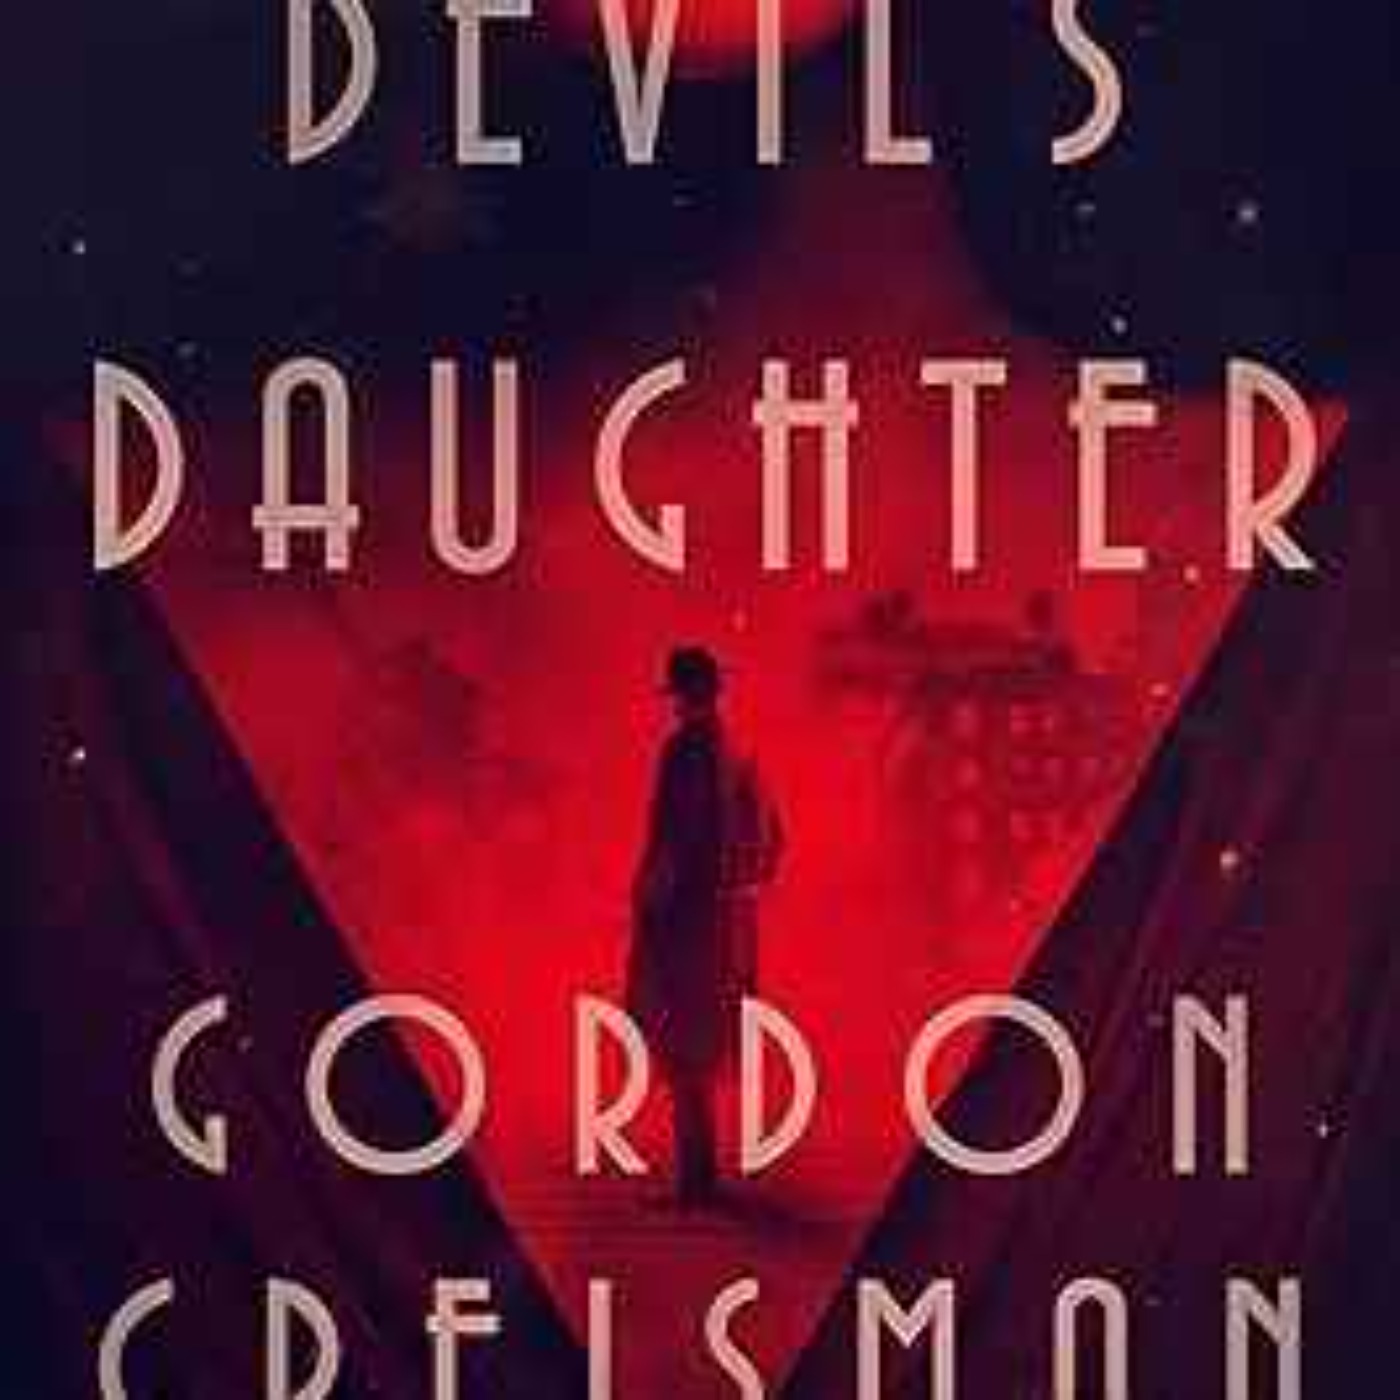 Gordon Greisman - The Devil’s Daughter